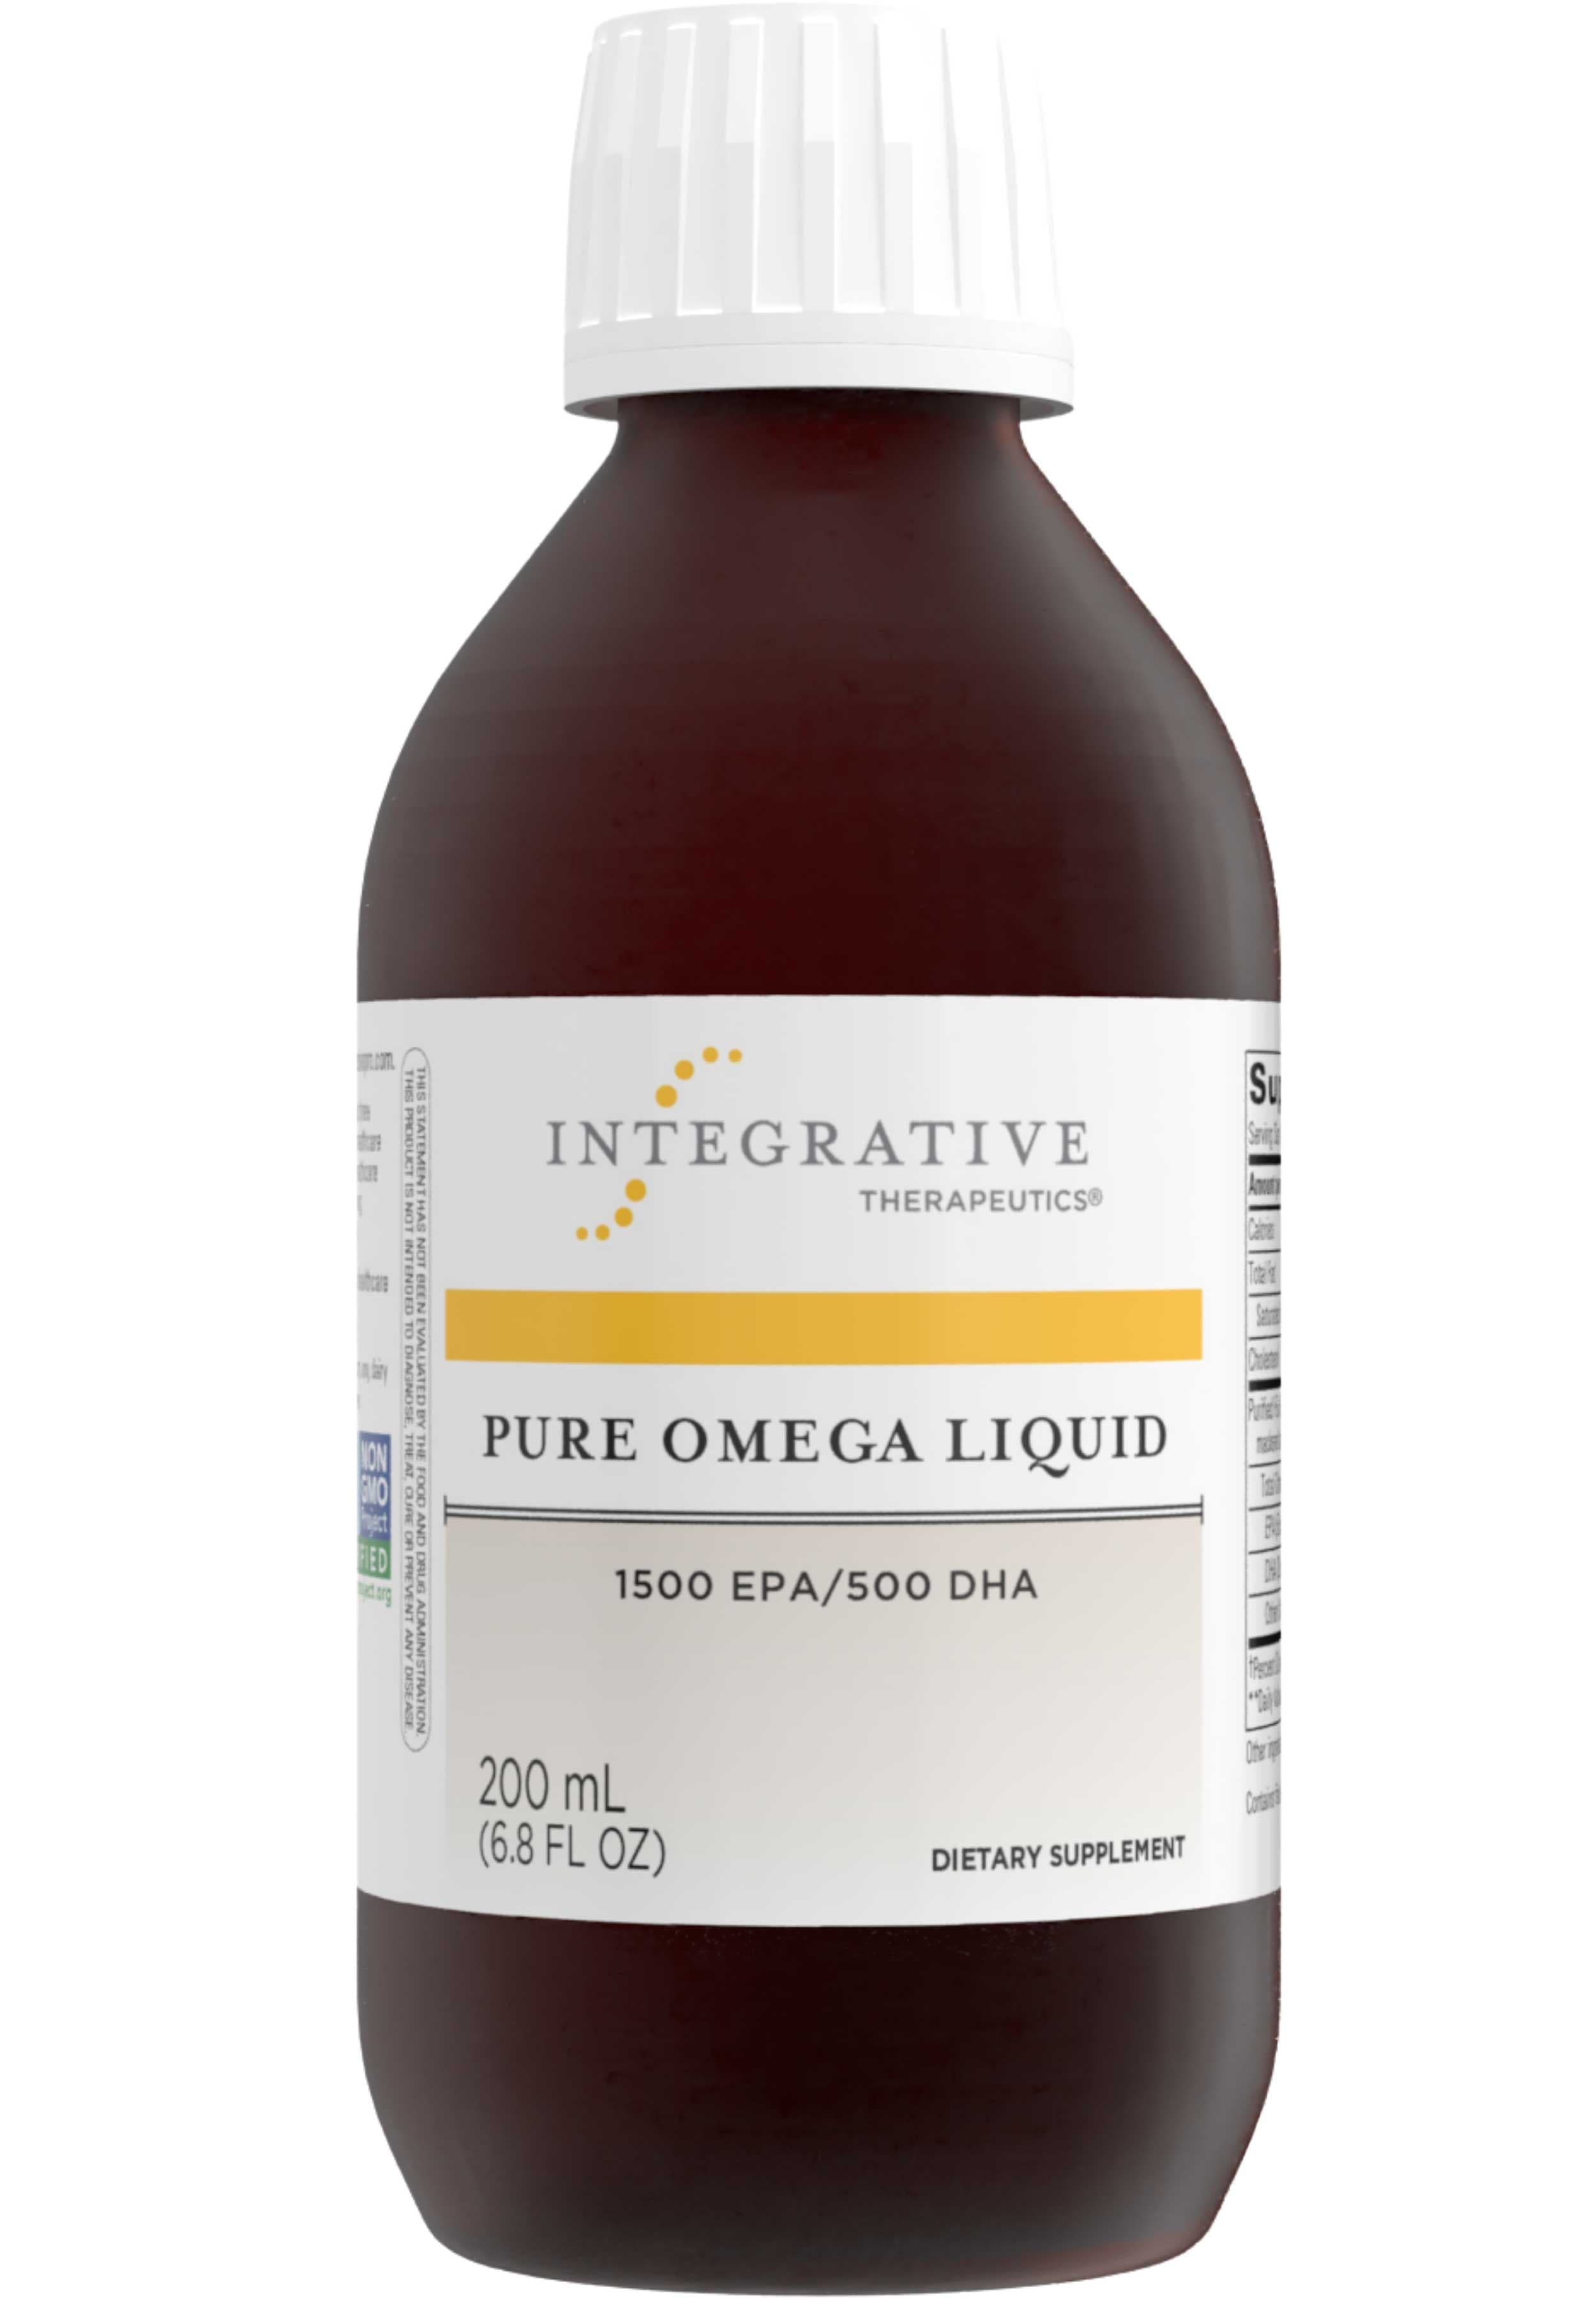 Integrative Therapeutics Pure Omega Liquid